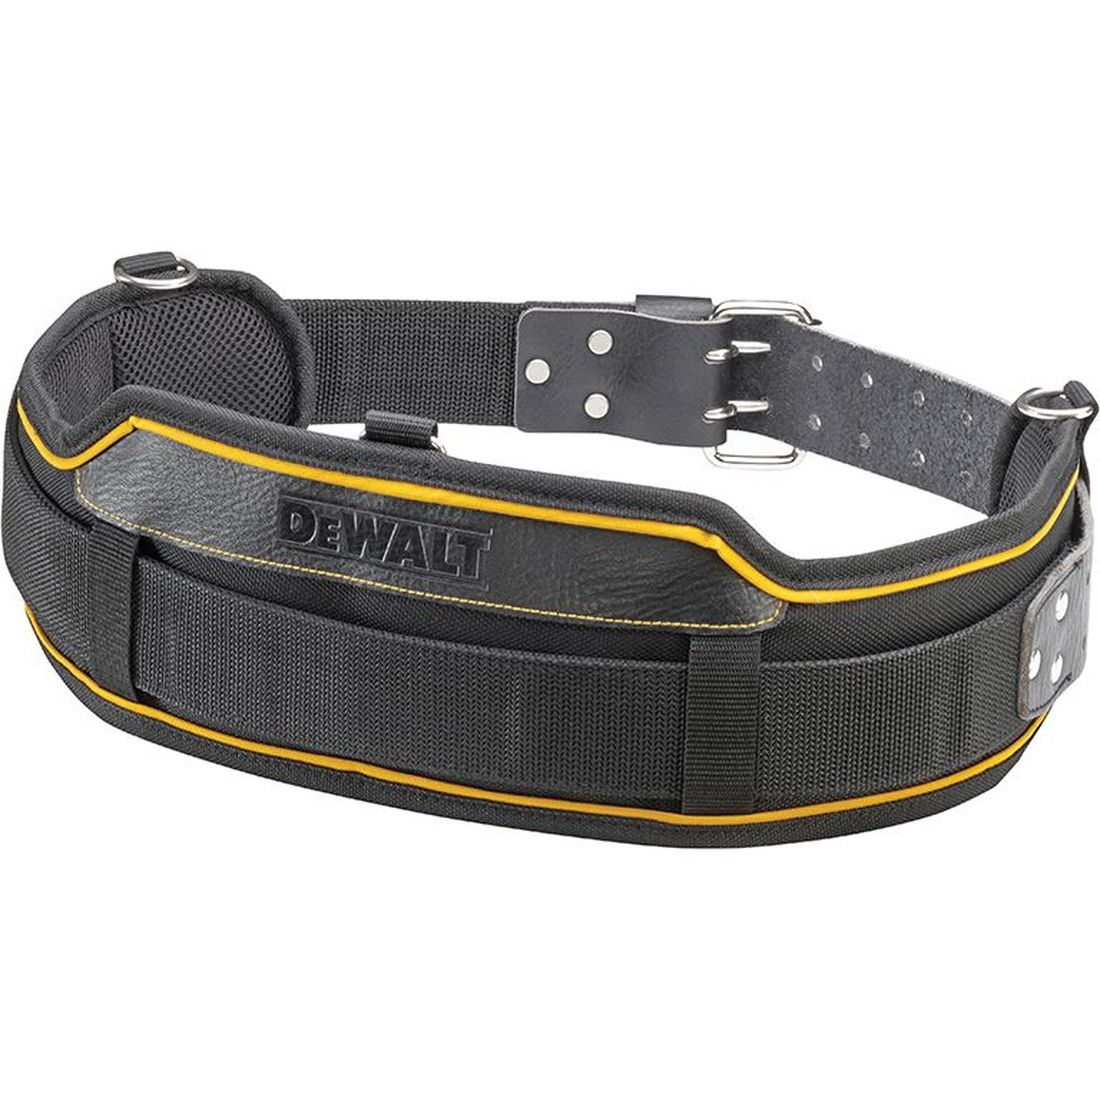 DEWALT DWST1-75651 Tool Belt             